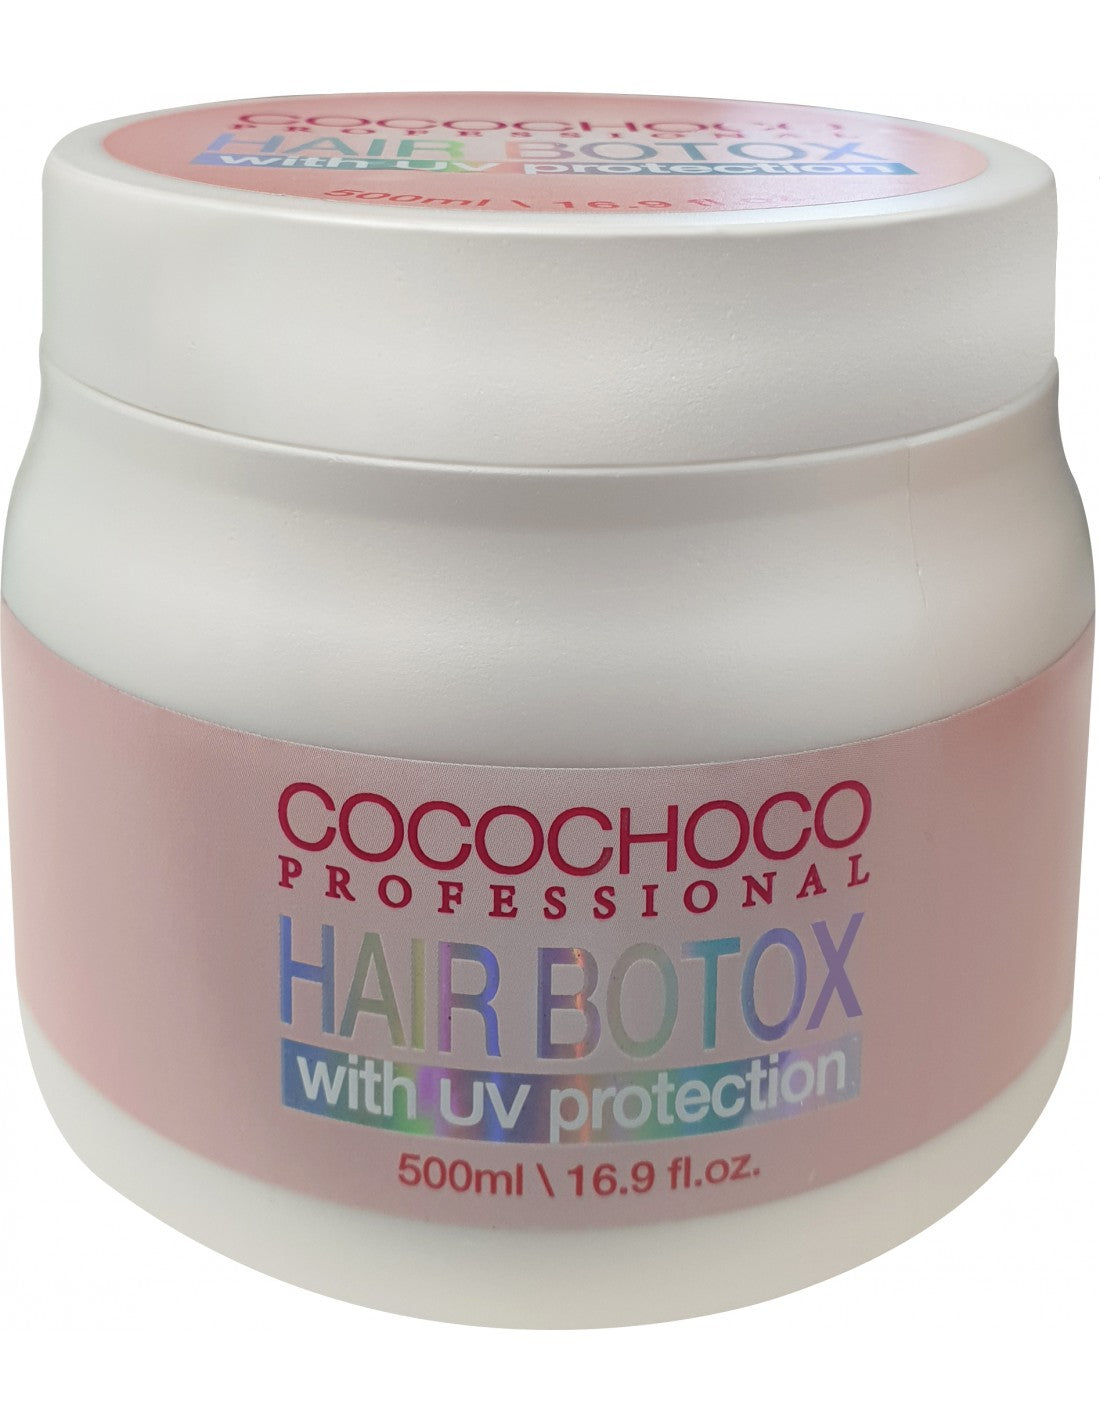 COCOCHOCO PROFESSIONAL HAIR BOTOX 500ml